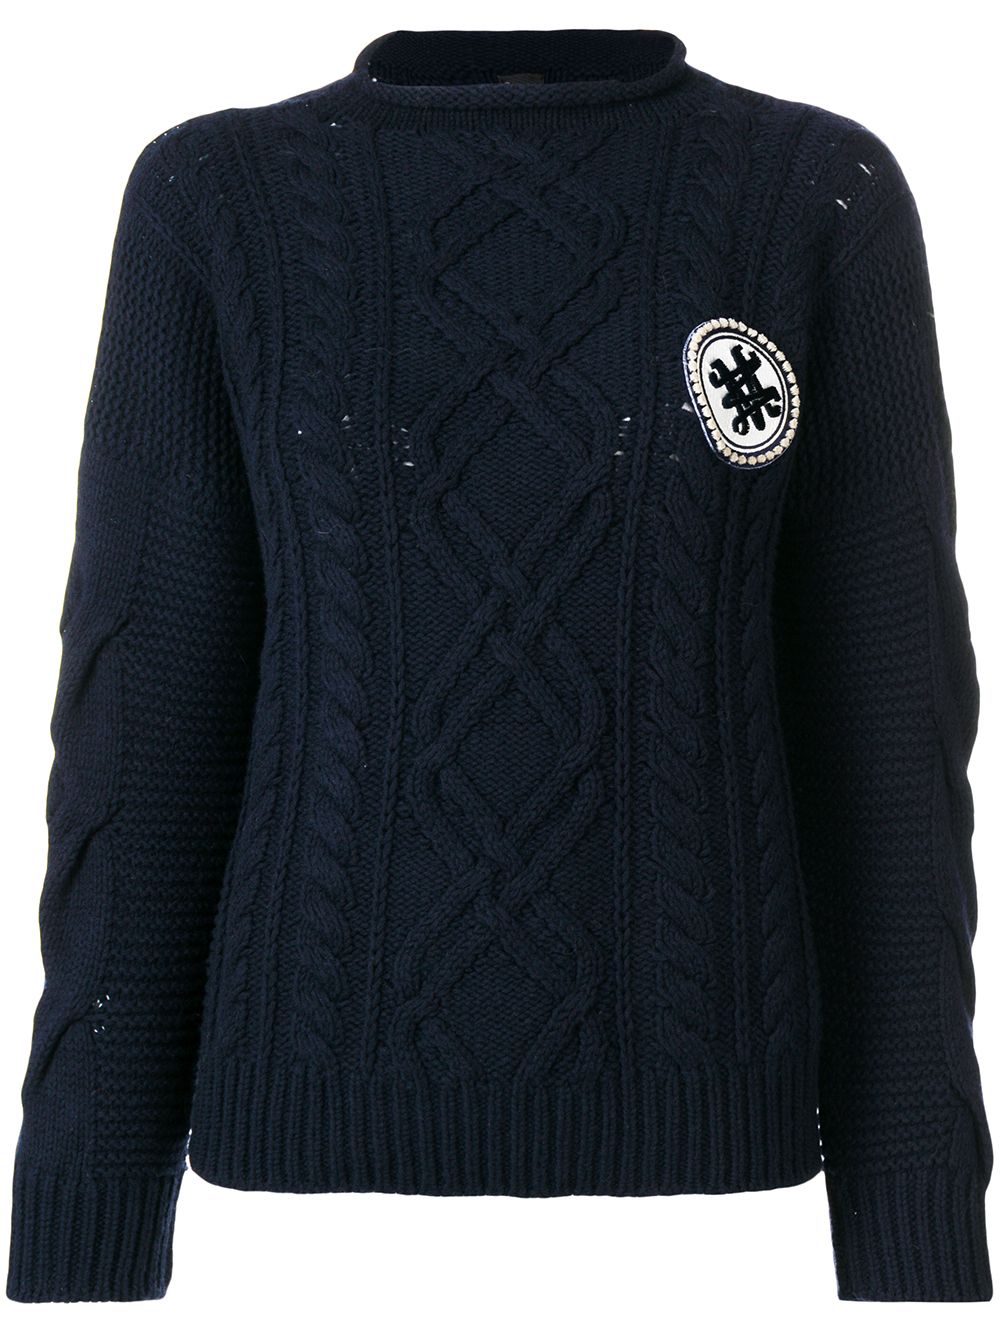 фото Mr & mrs italy вязаный свитер с логотипом